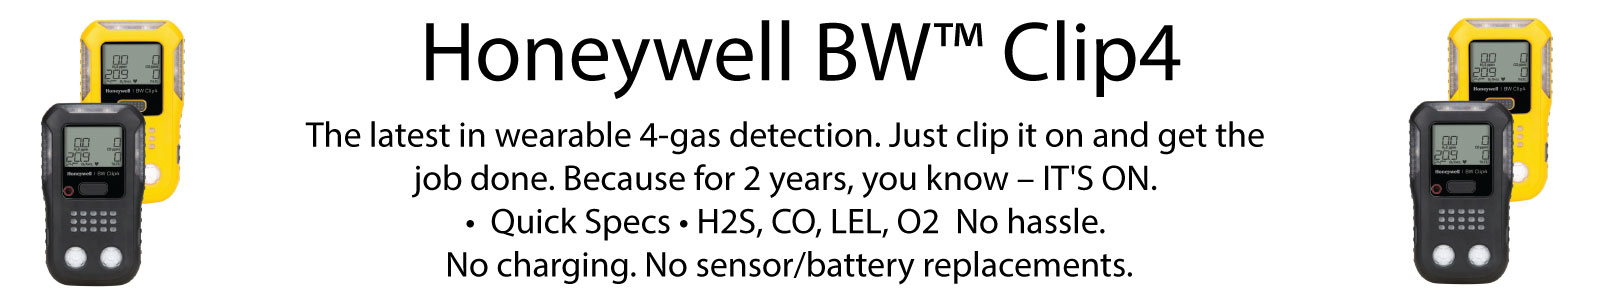 Honeywell BW Clip4 Multi Gas Detector